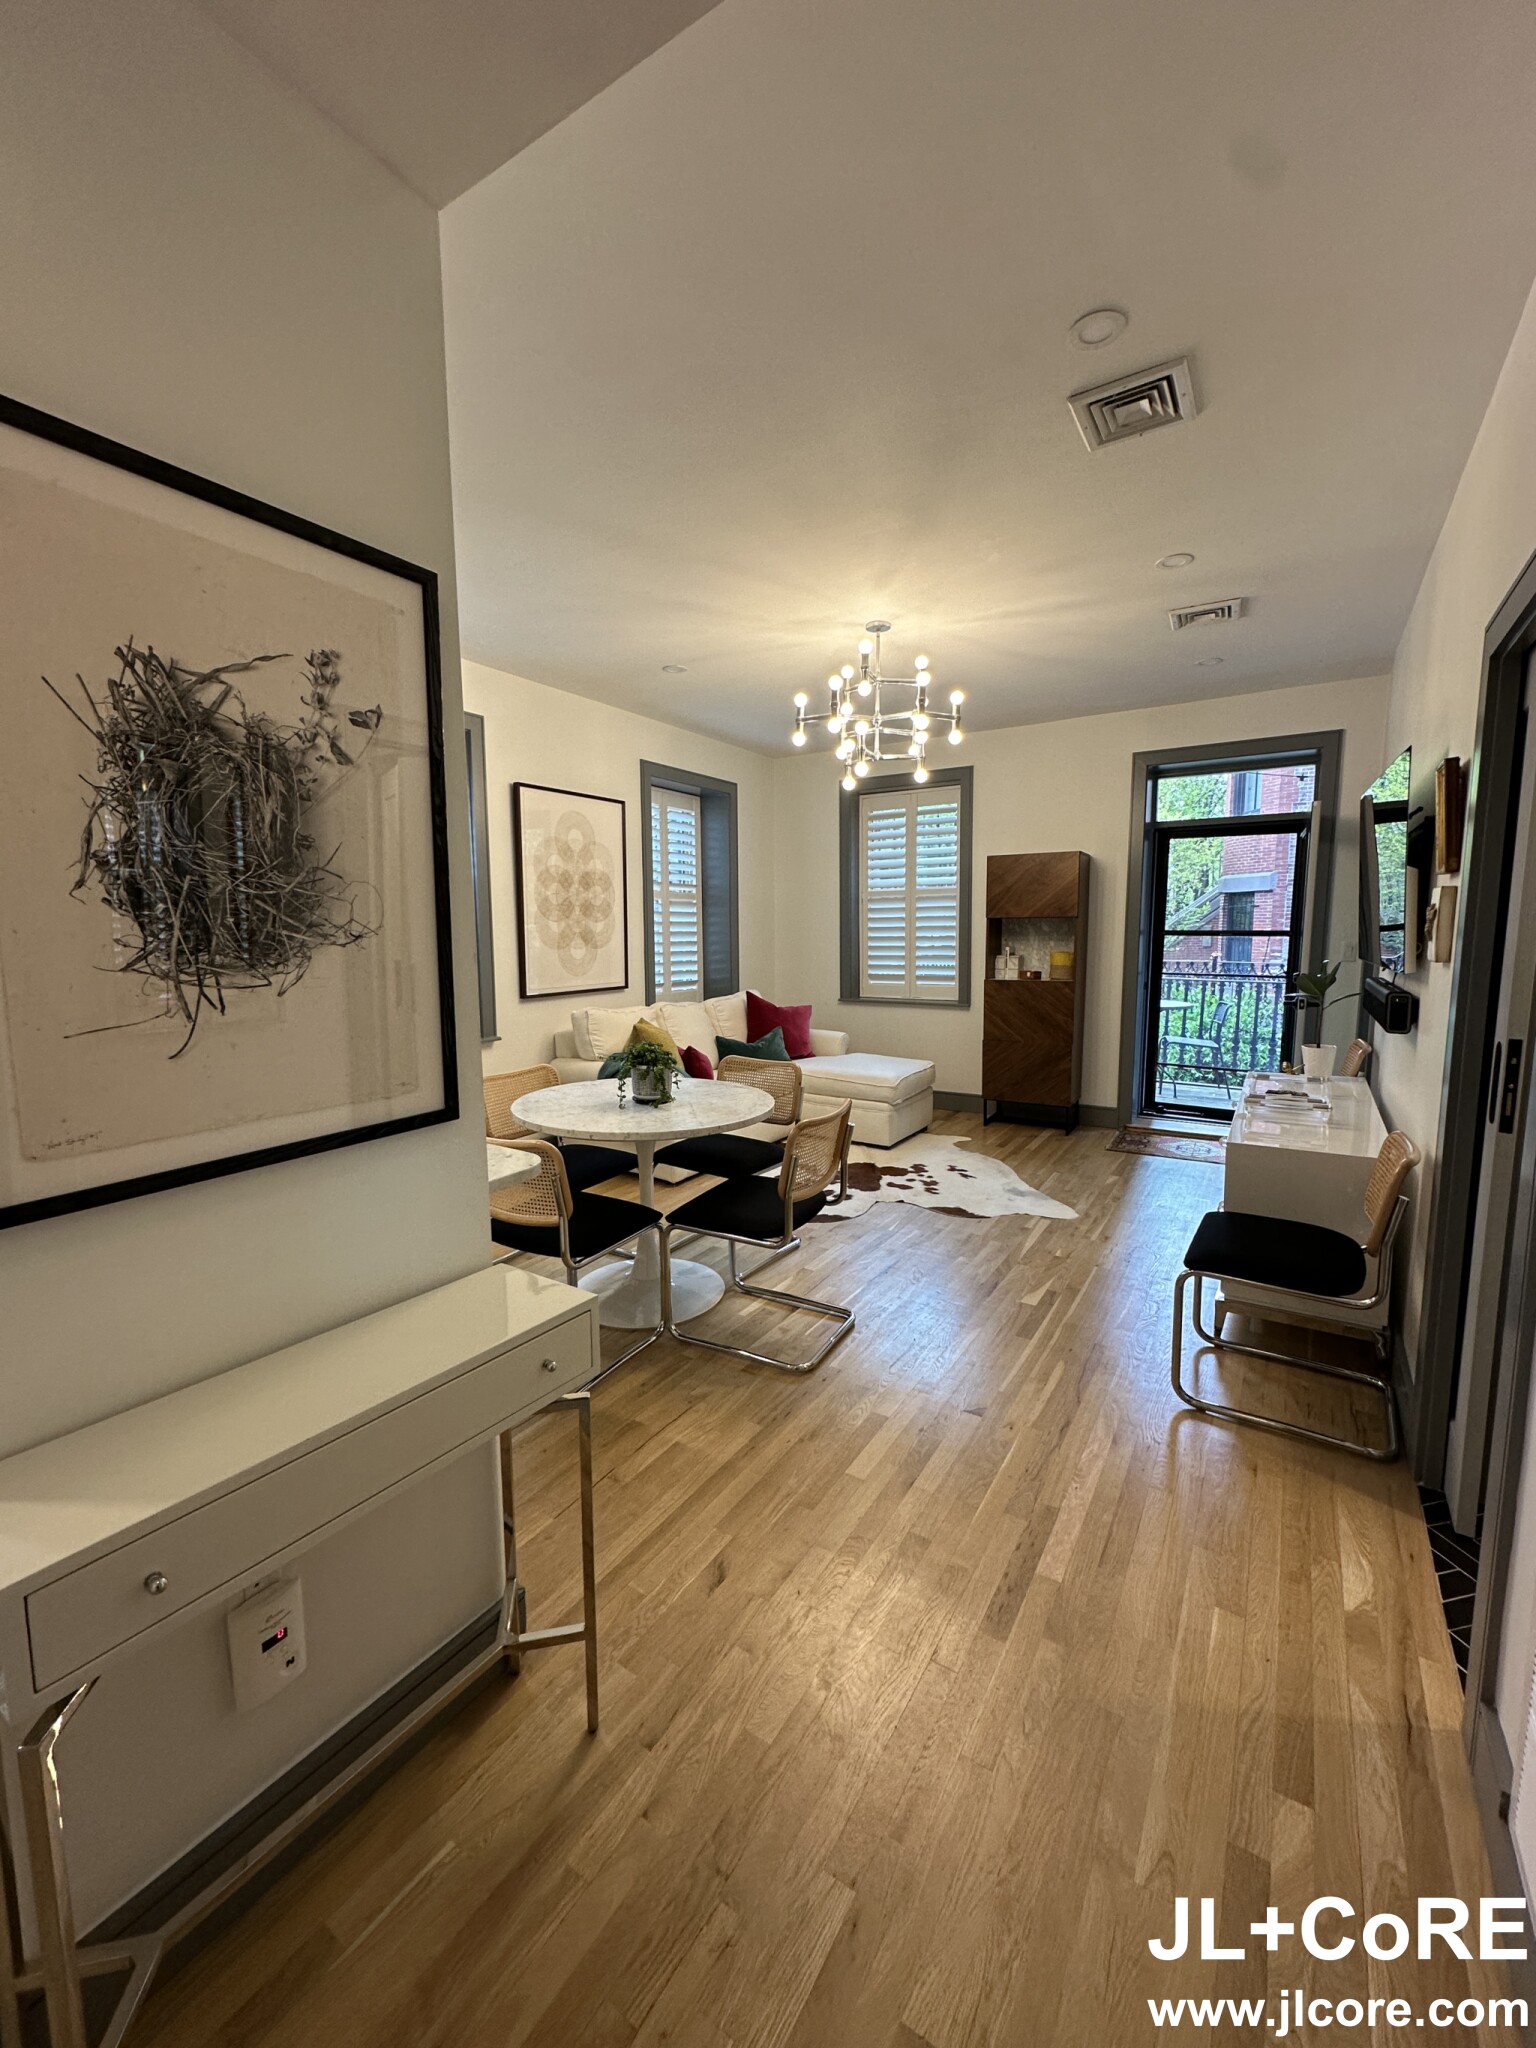 Photos of apartment on Wareham St.,Boston MA 02118